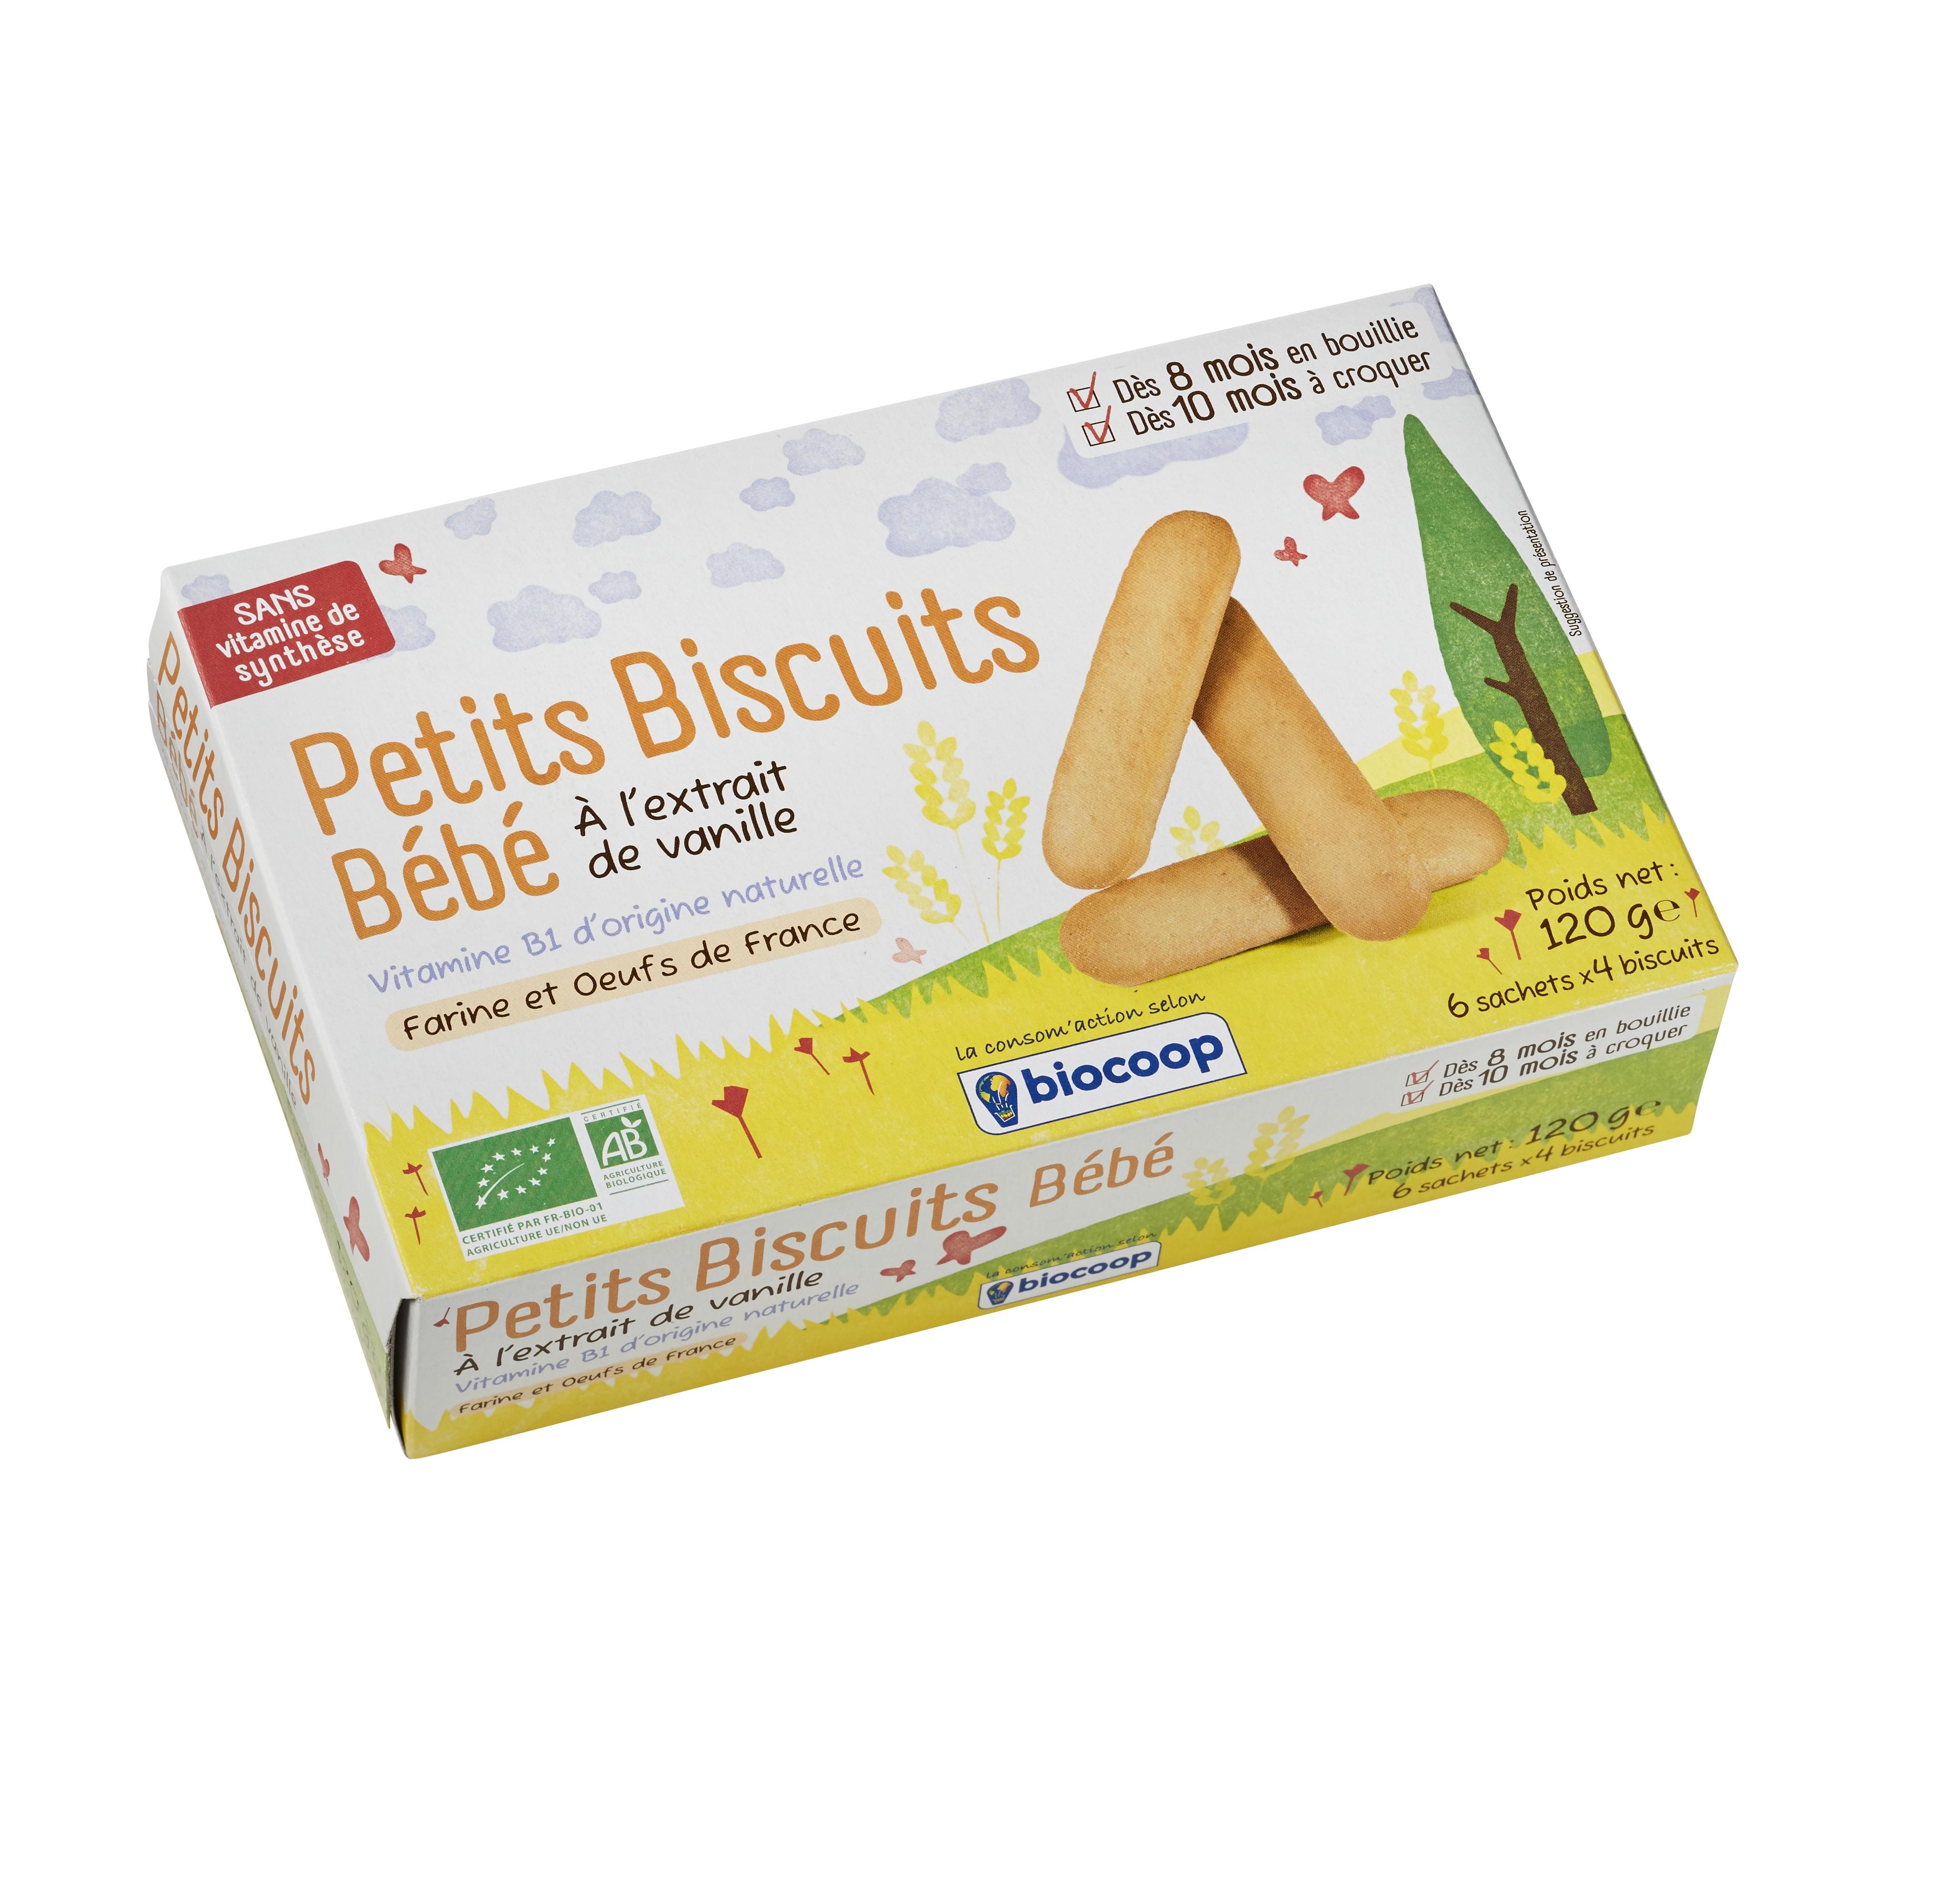 Biocoop innove avec ses Petits Biscuits Bébé bio à la vitamine B1 naturelle !